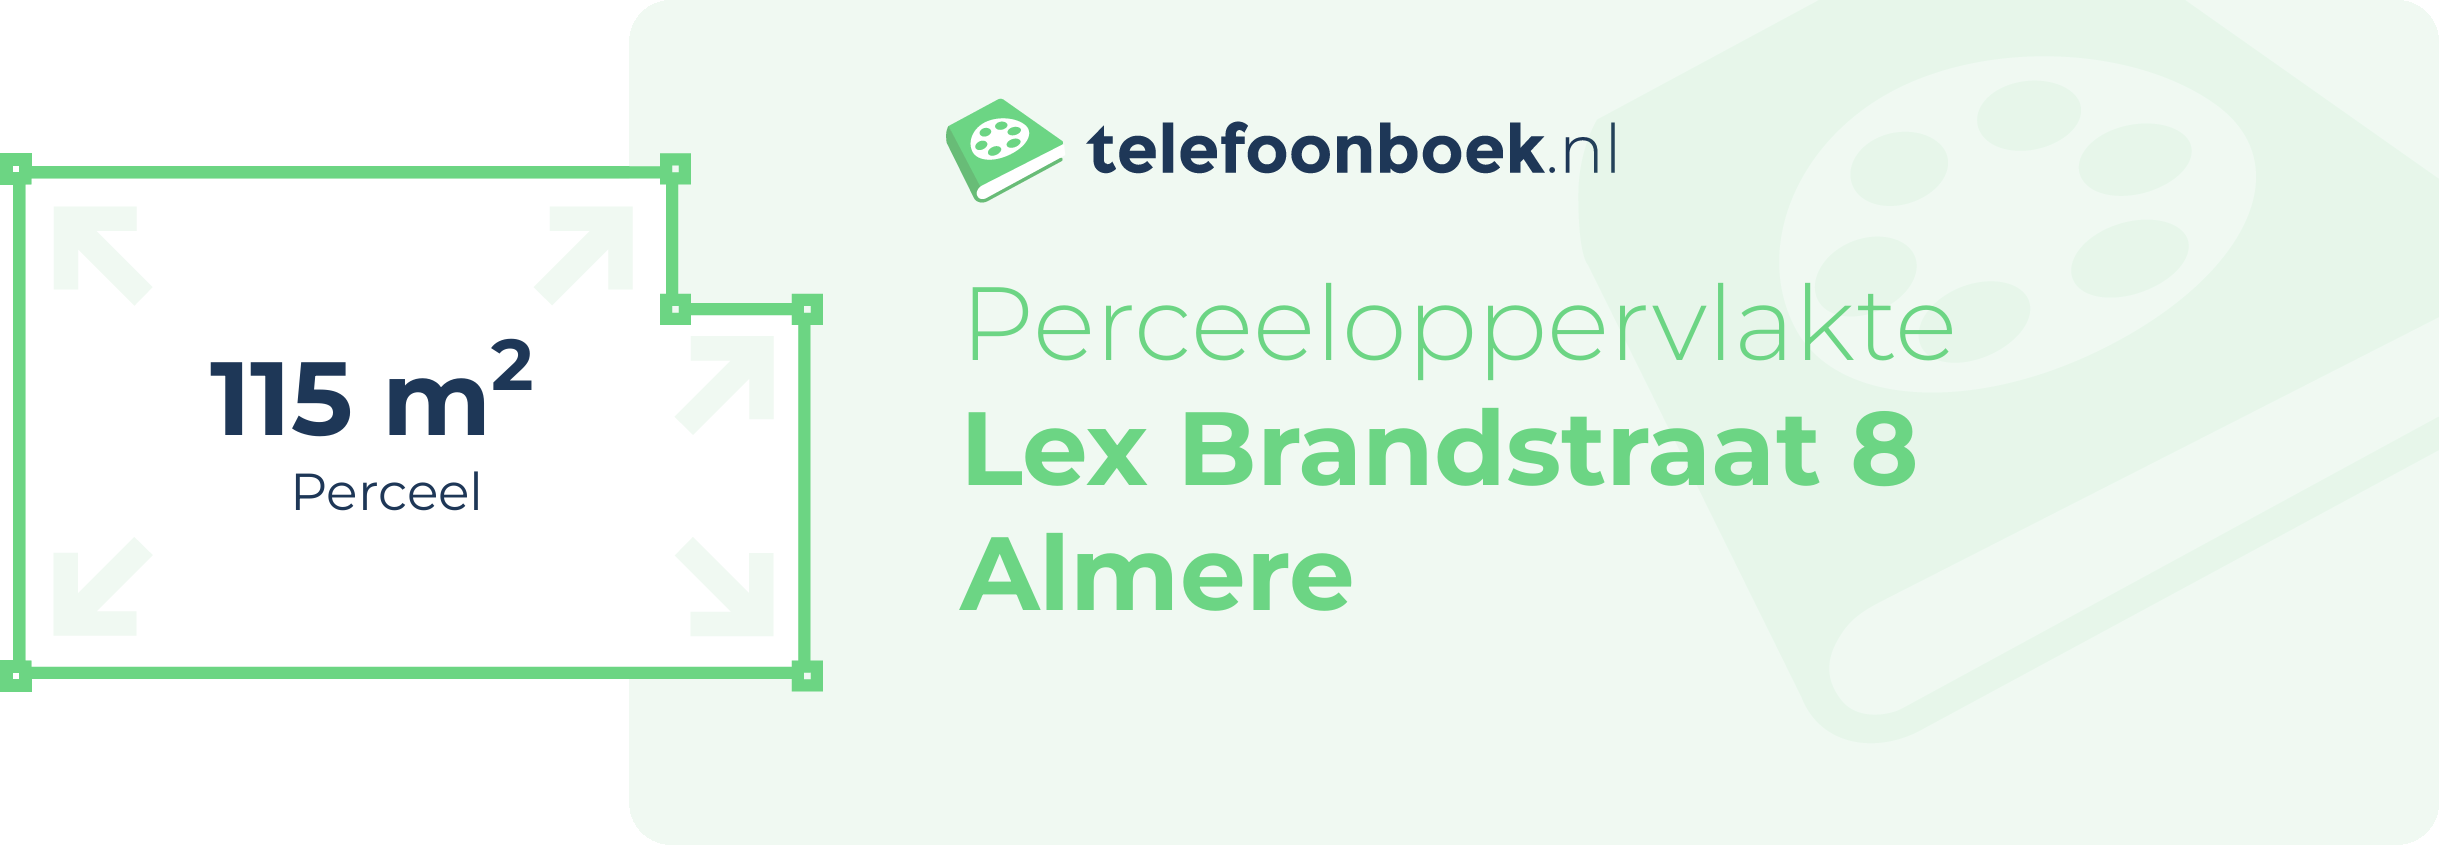 Perceeloppervlakte Lex Brandstraat 8 Almere